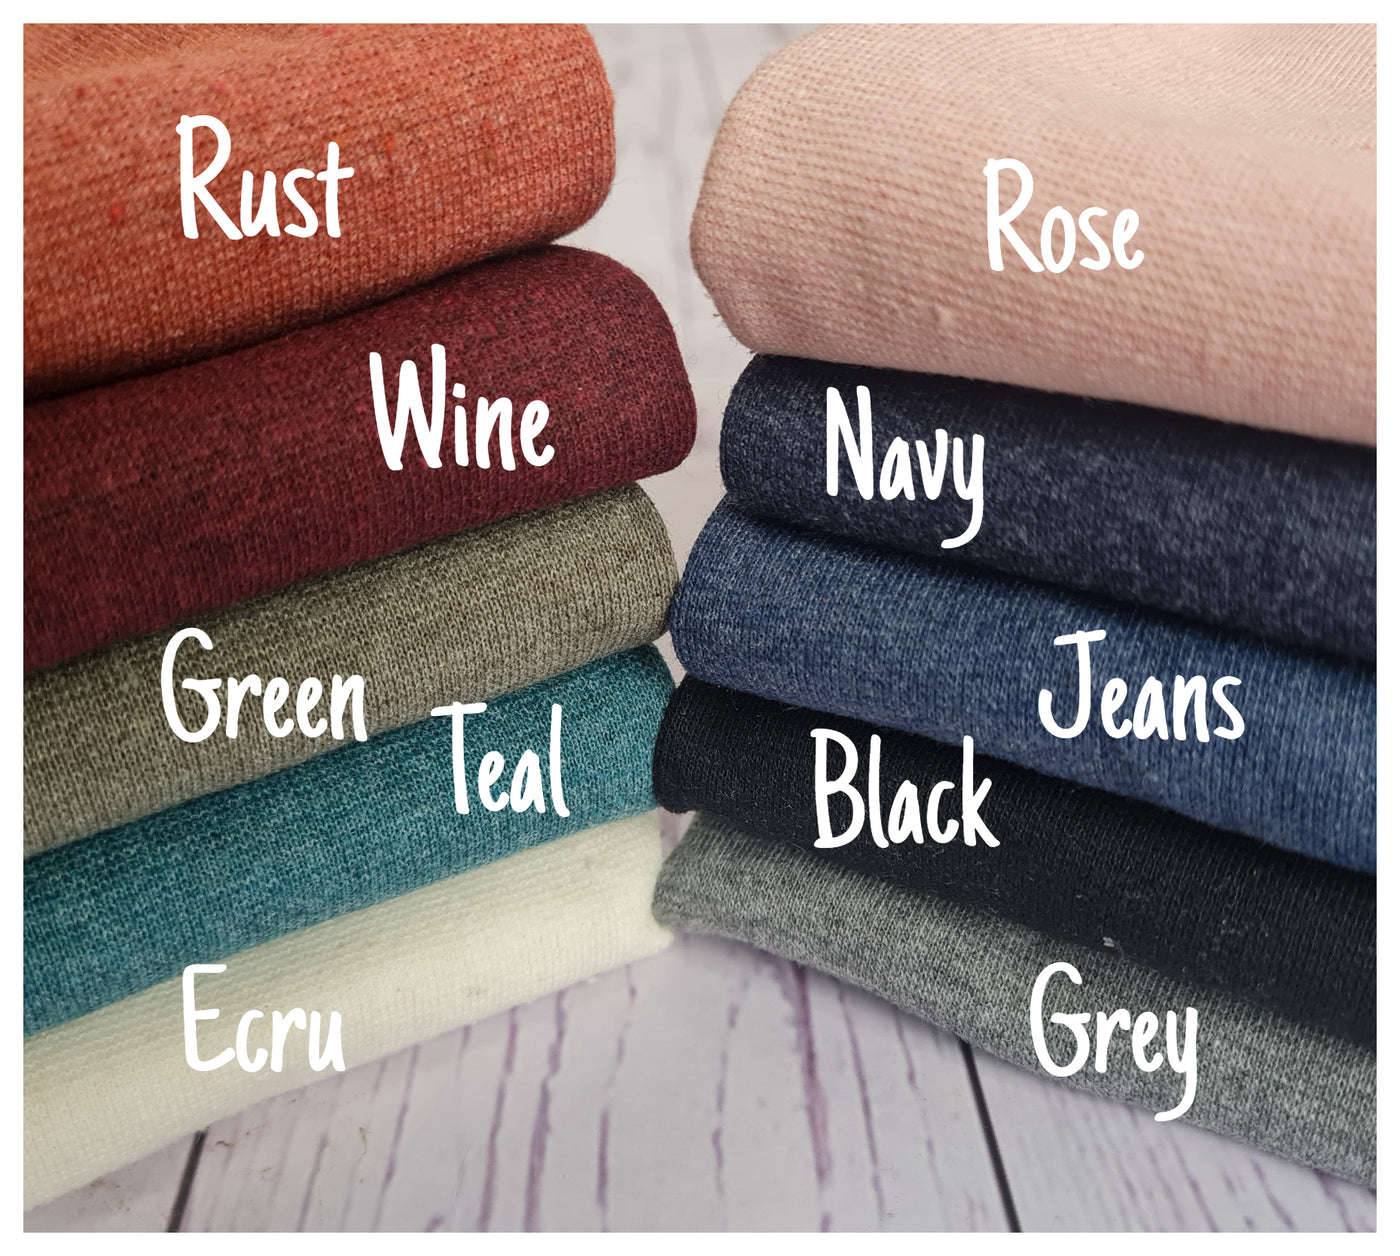 BARGAINS: Fabric remnants/end of rolls, tubular jersey ribbing knit fabrics